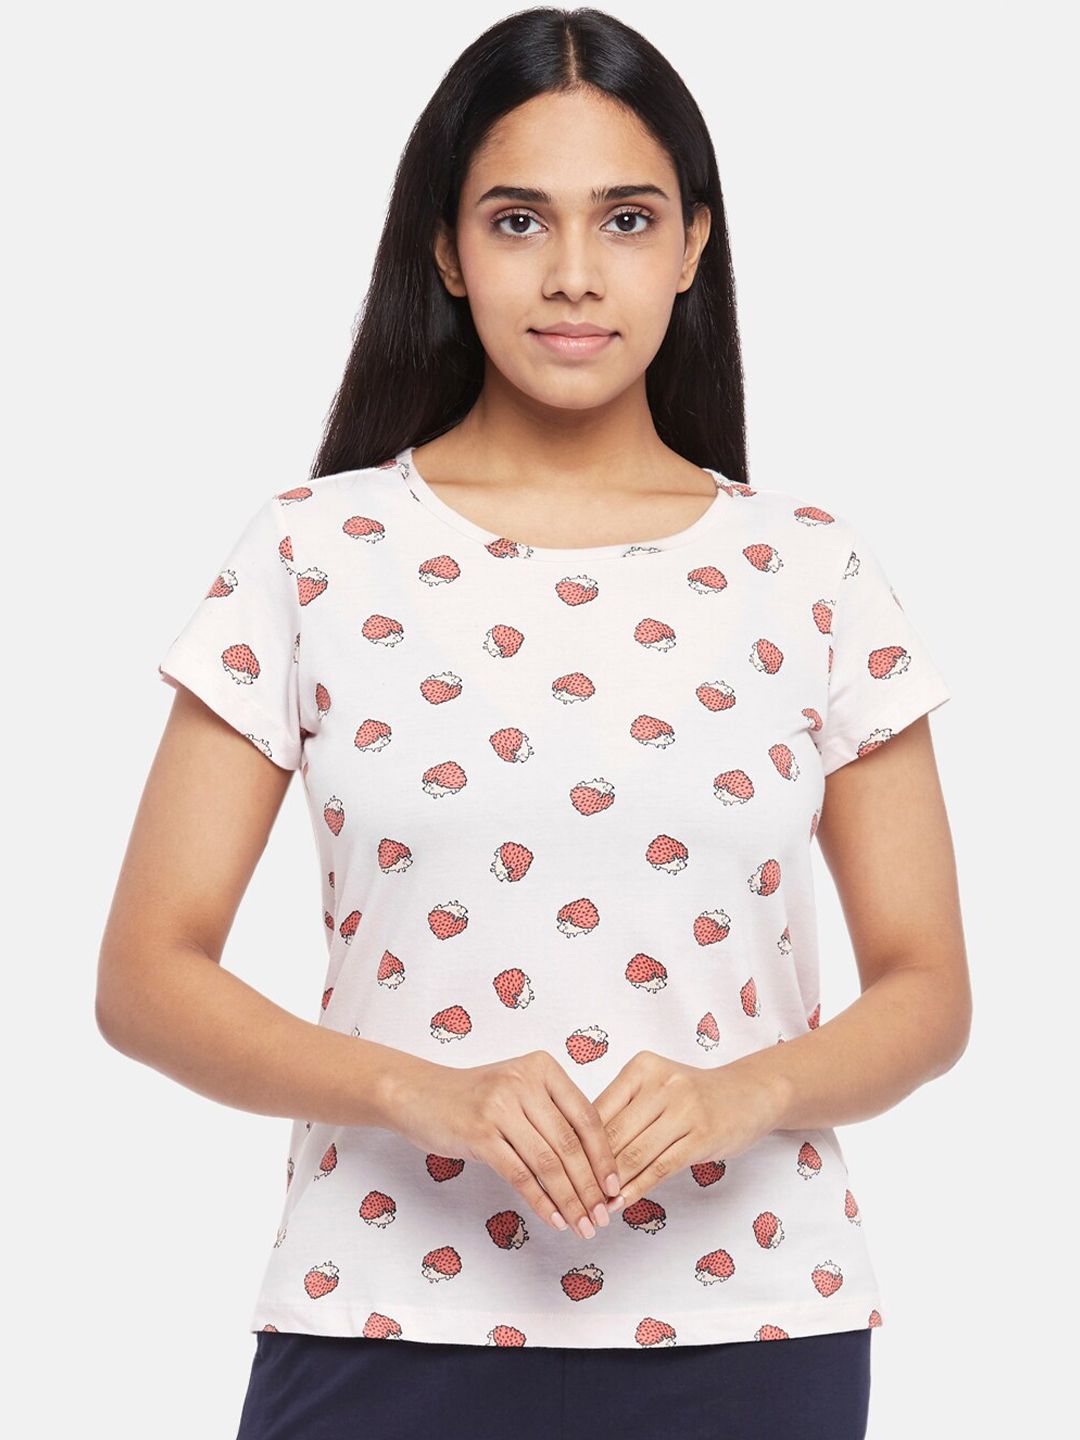 Dreamz by Pantaloons Women White & Pink Printed Lounge Tshirt Price in India